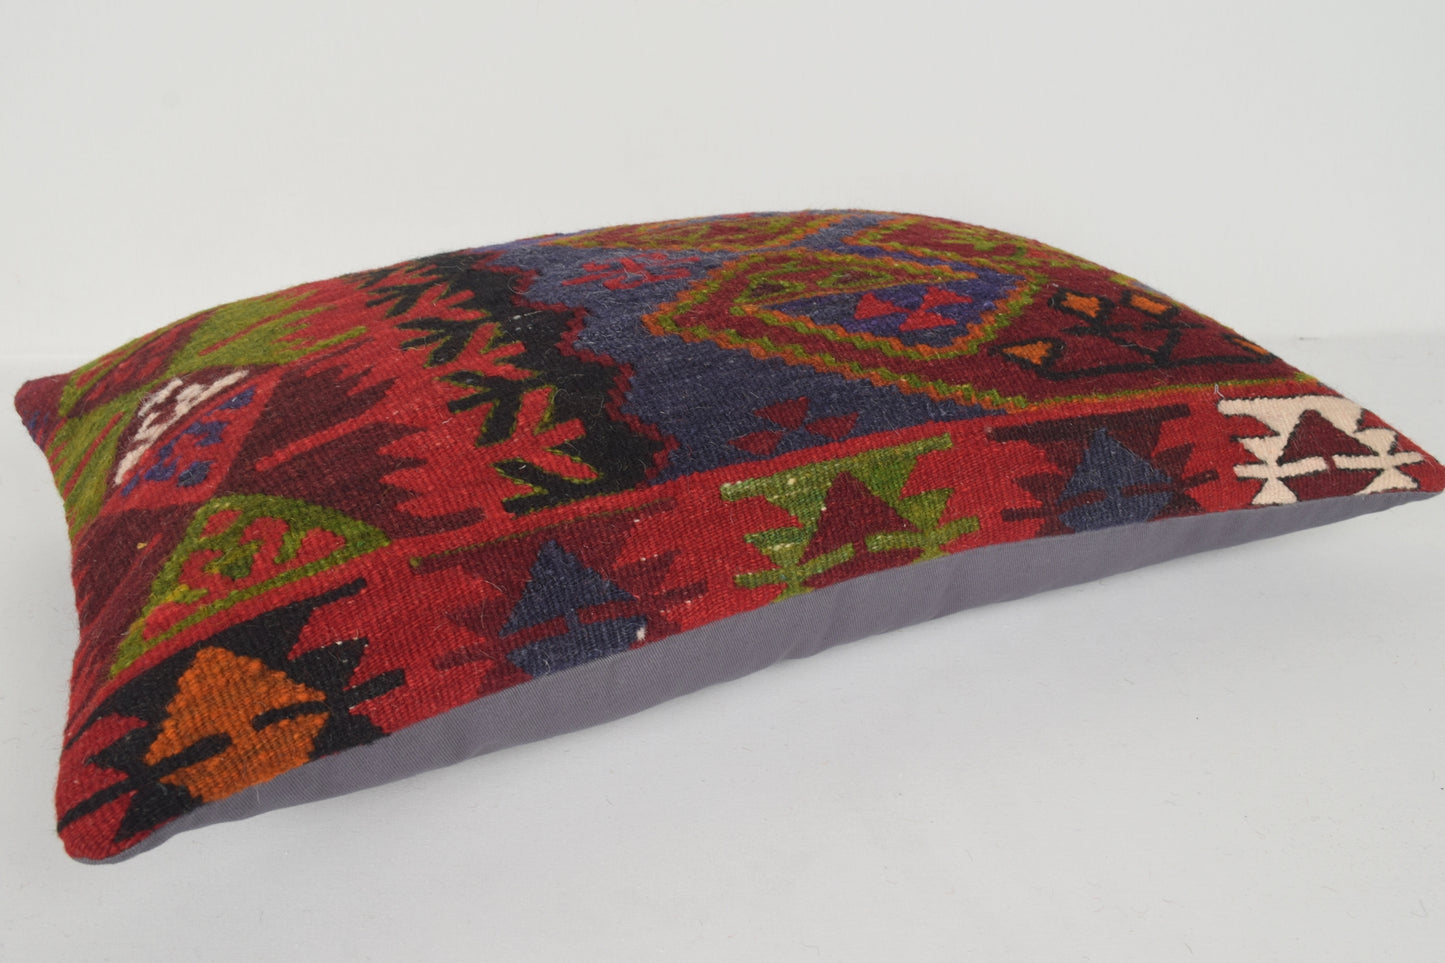 Kilim Cushion Covers Ebay E00365 Lumbar Bench Handiwork Mediterranean